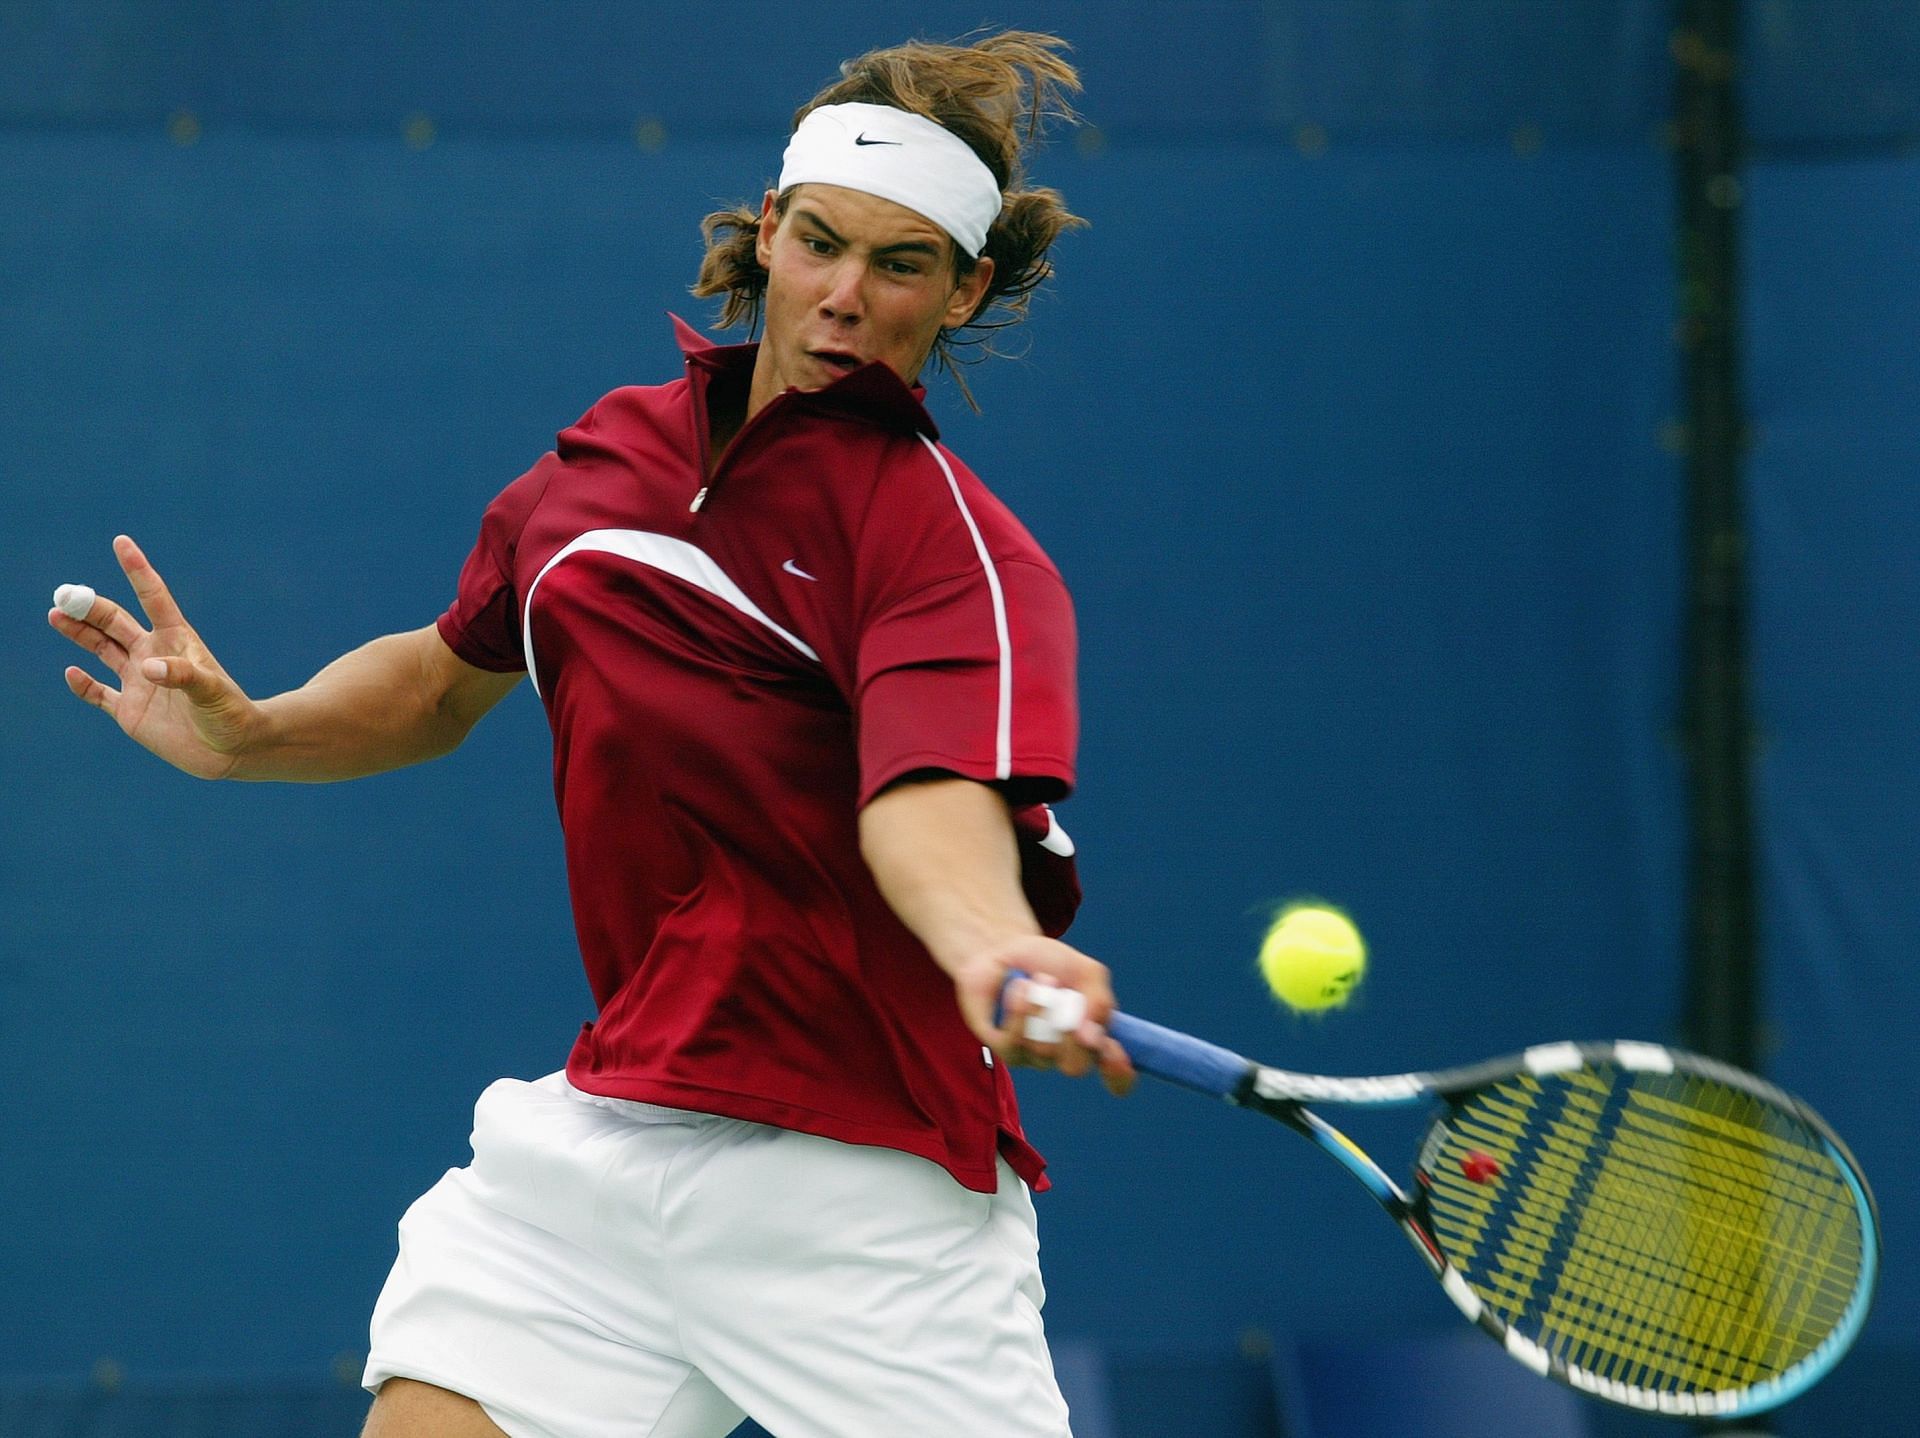 Rafael Nadal at the 2003 US Open